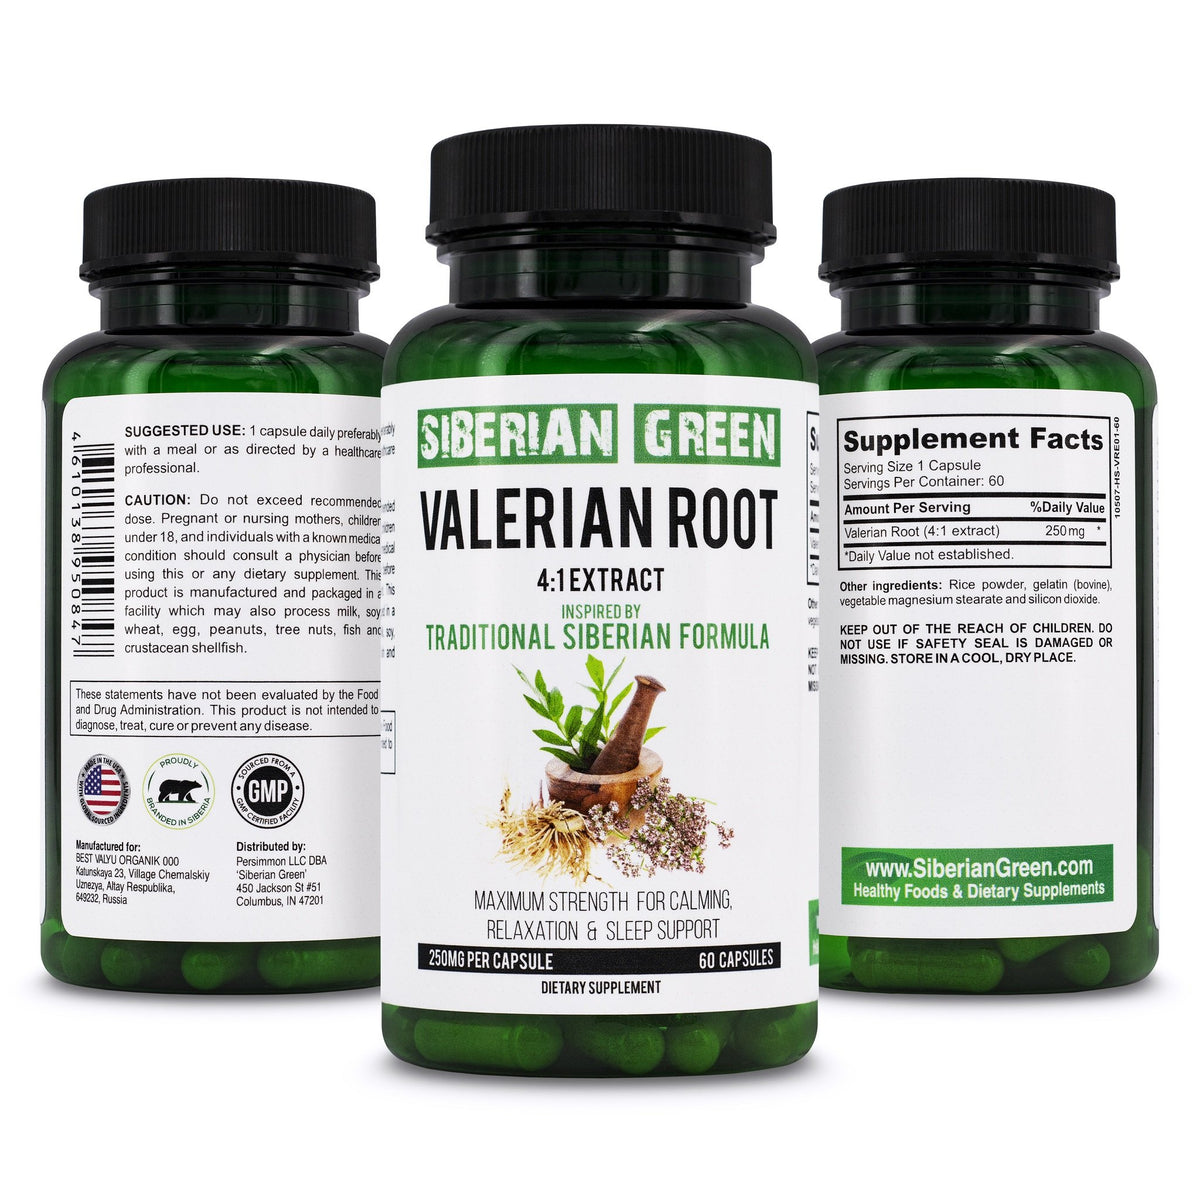 Siberian Green Valerian Root 60 Caps - Extra Strength Valerian Extract for Calming, Sleep Support